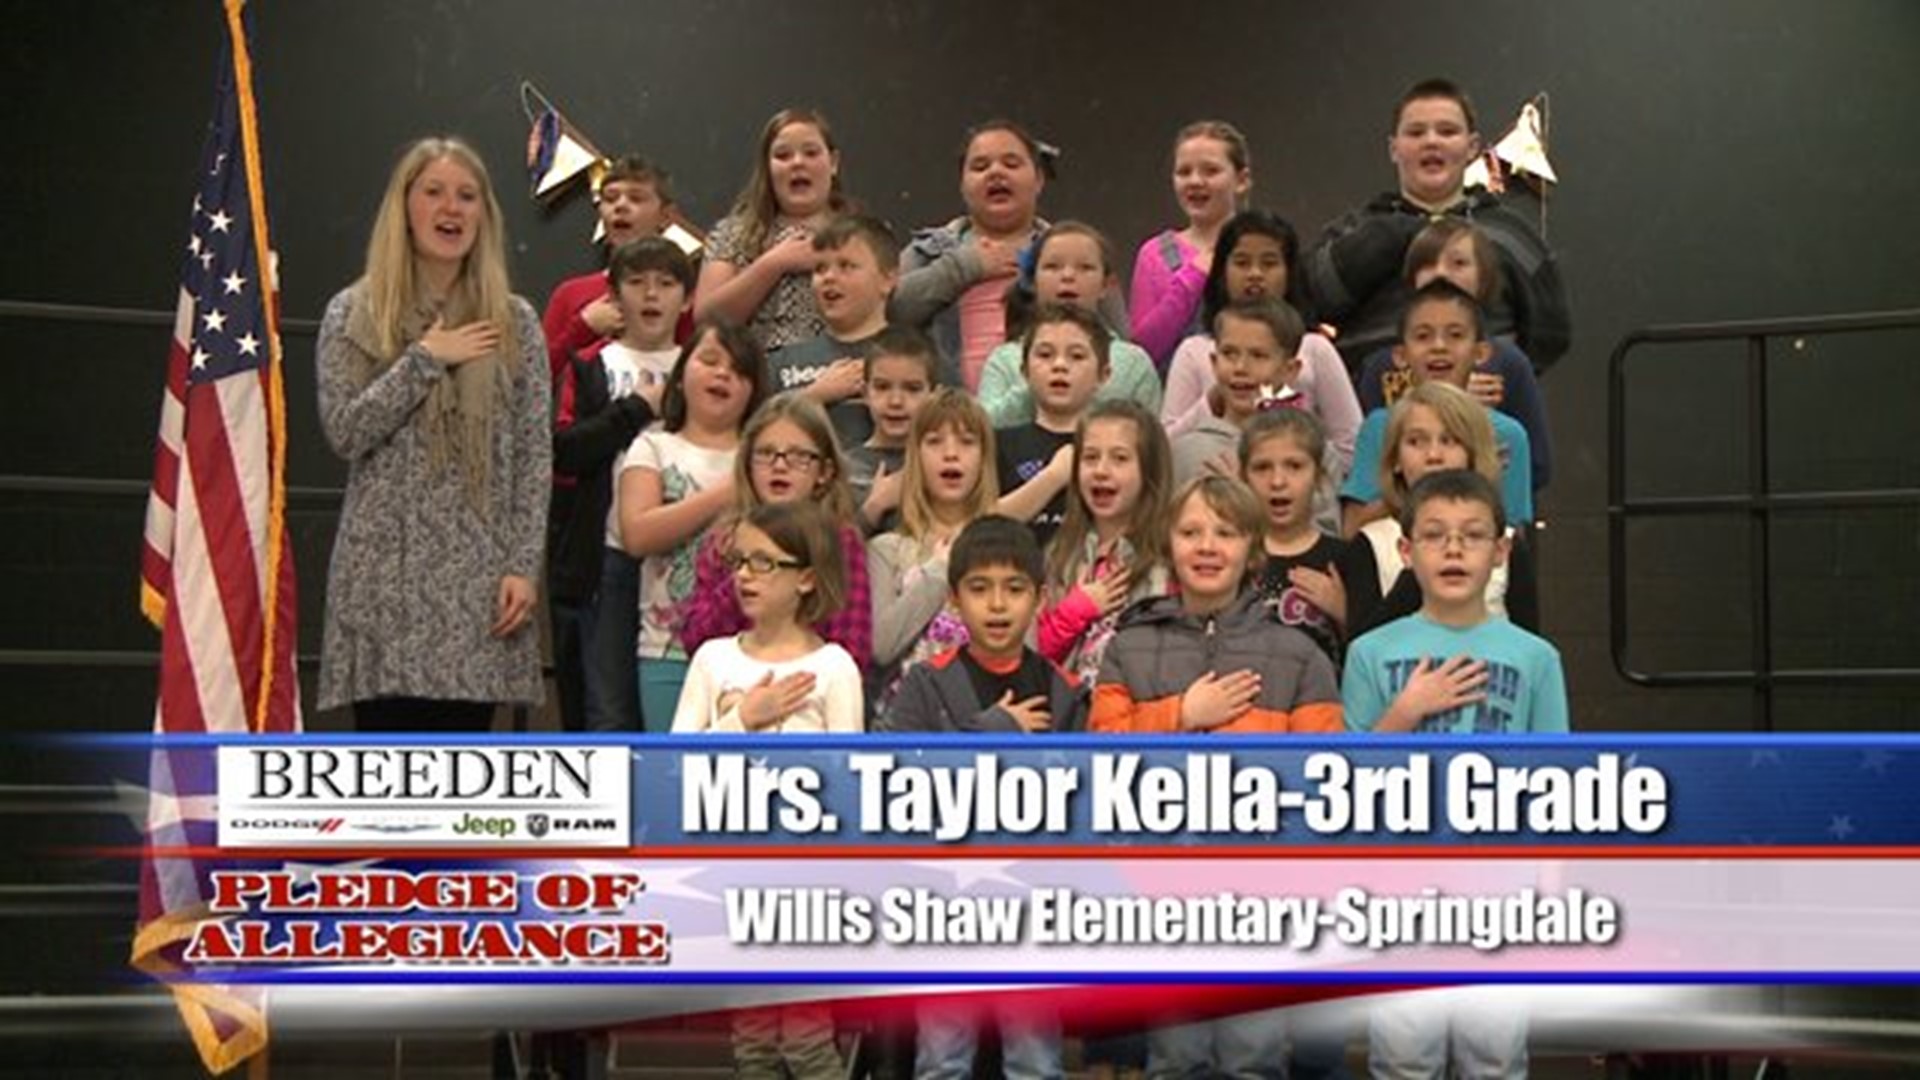 Willis Shaw Elementary, Springdale - Mrs. Taylor Kella - 3rd Grade